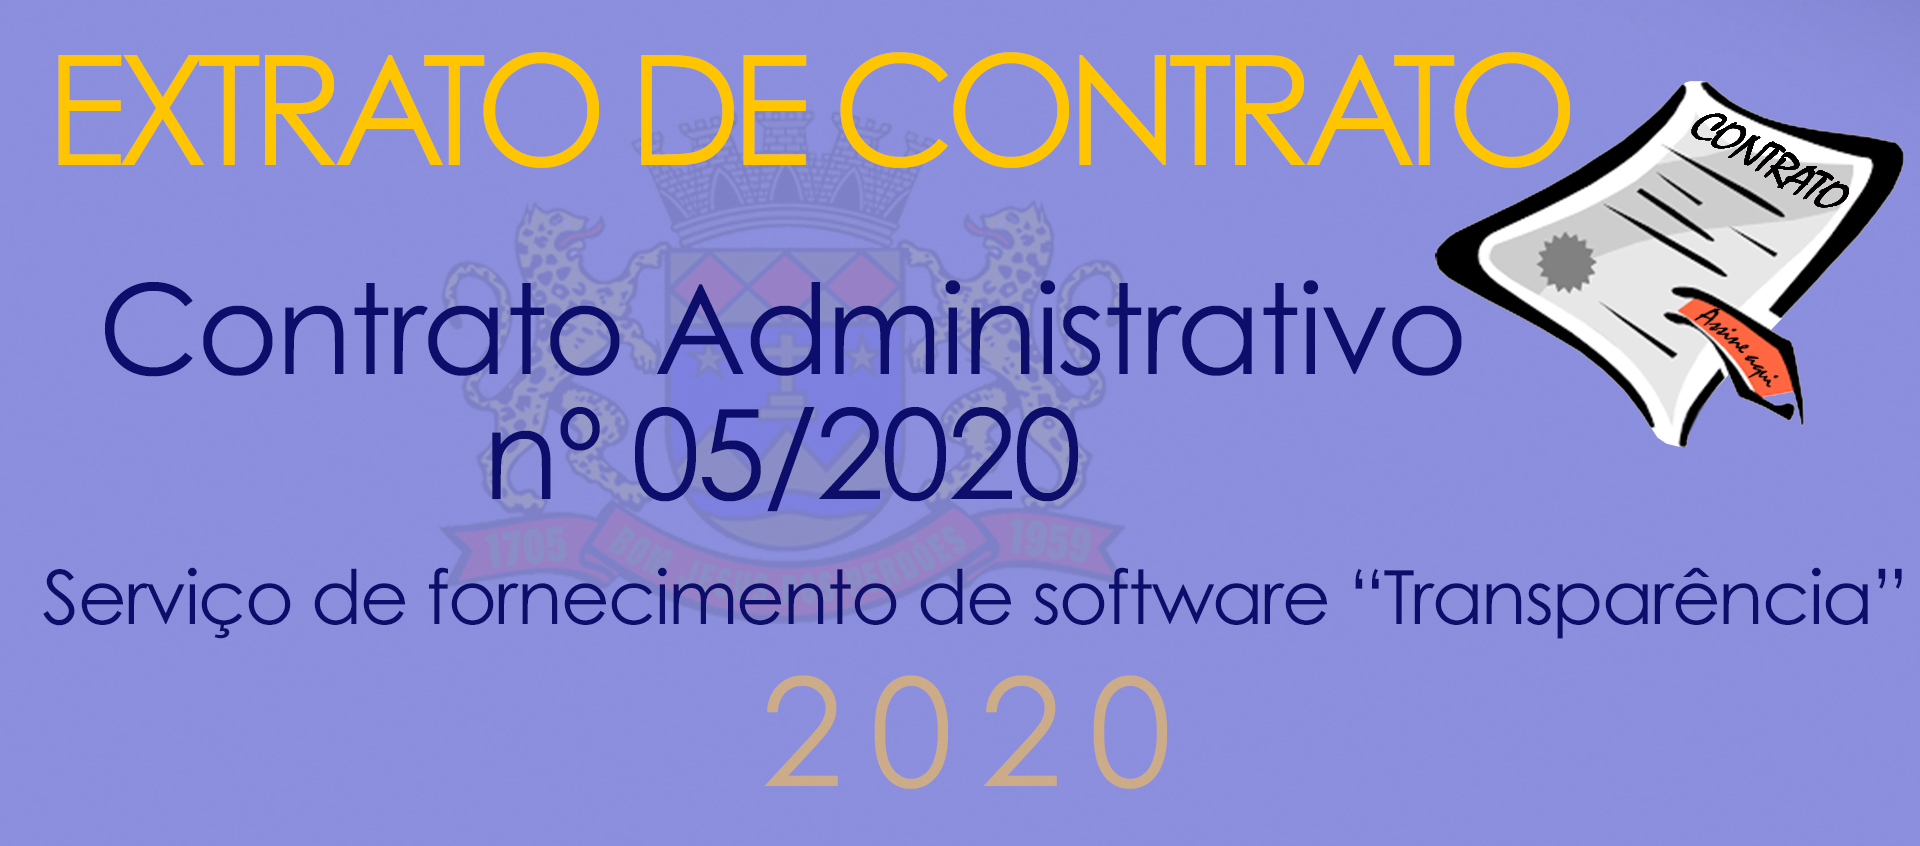 Extrato de Contrato Administrativo 05/2020